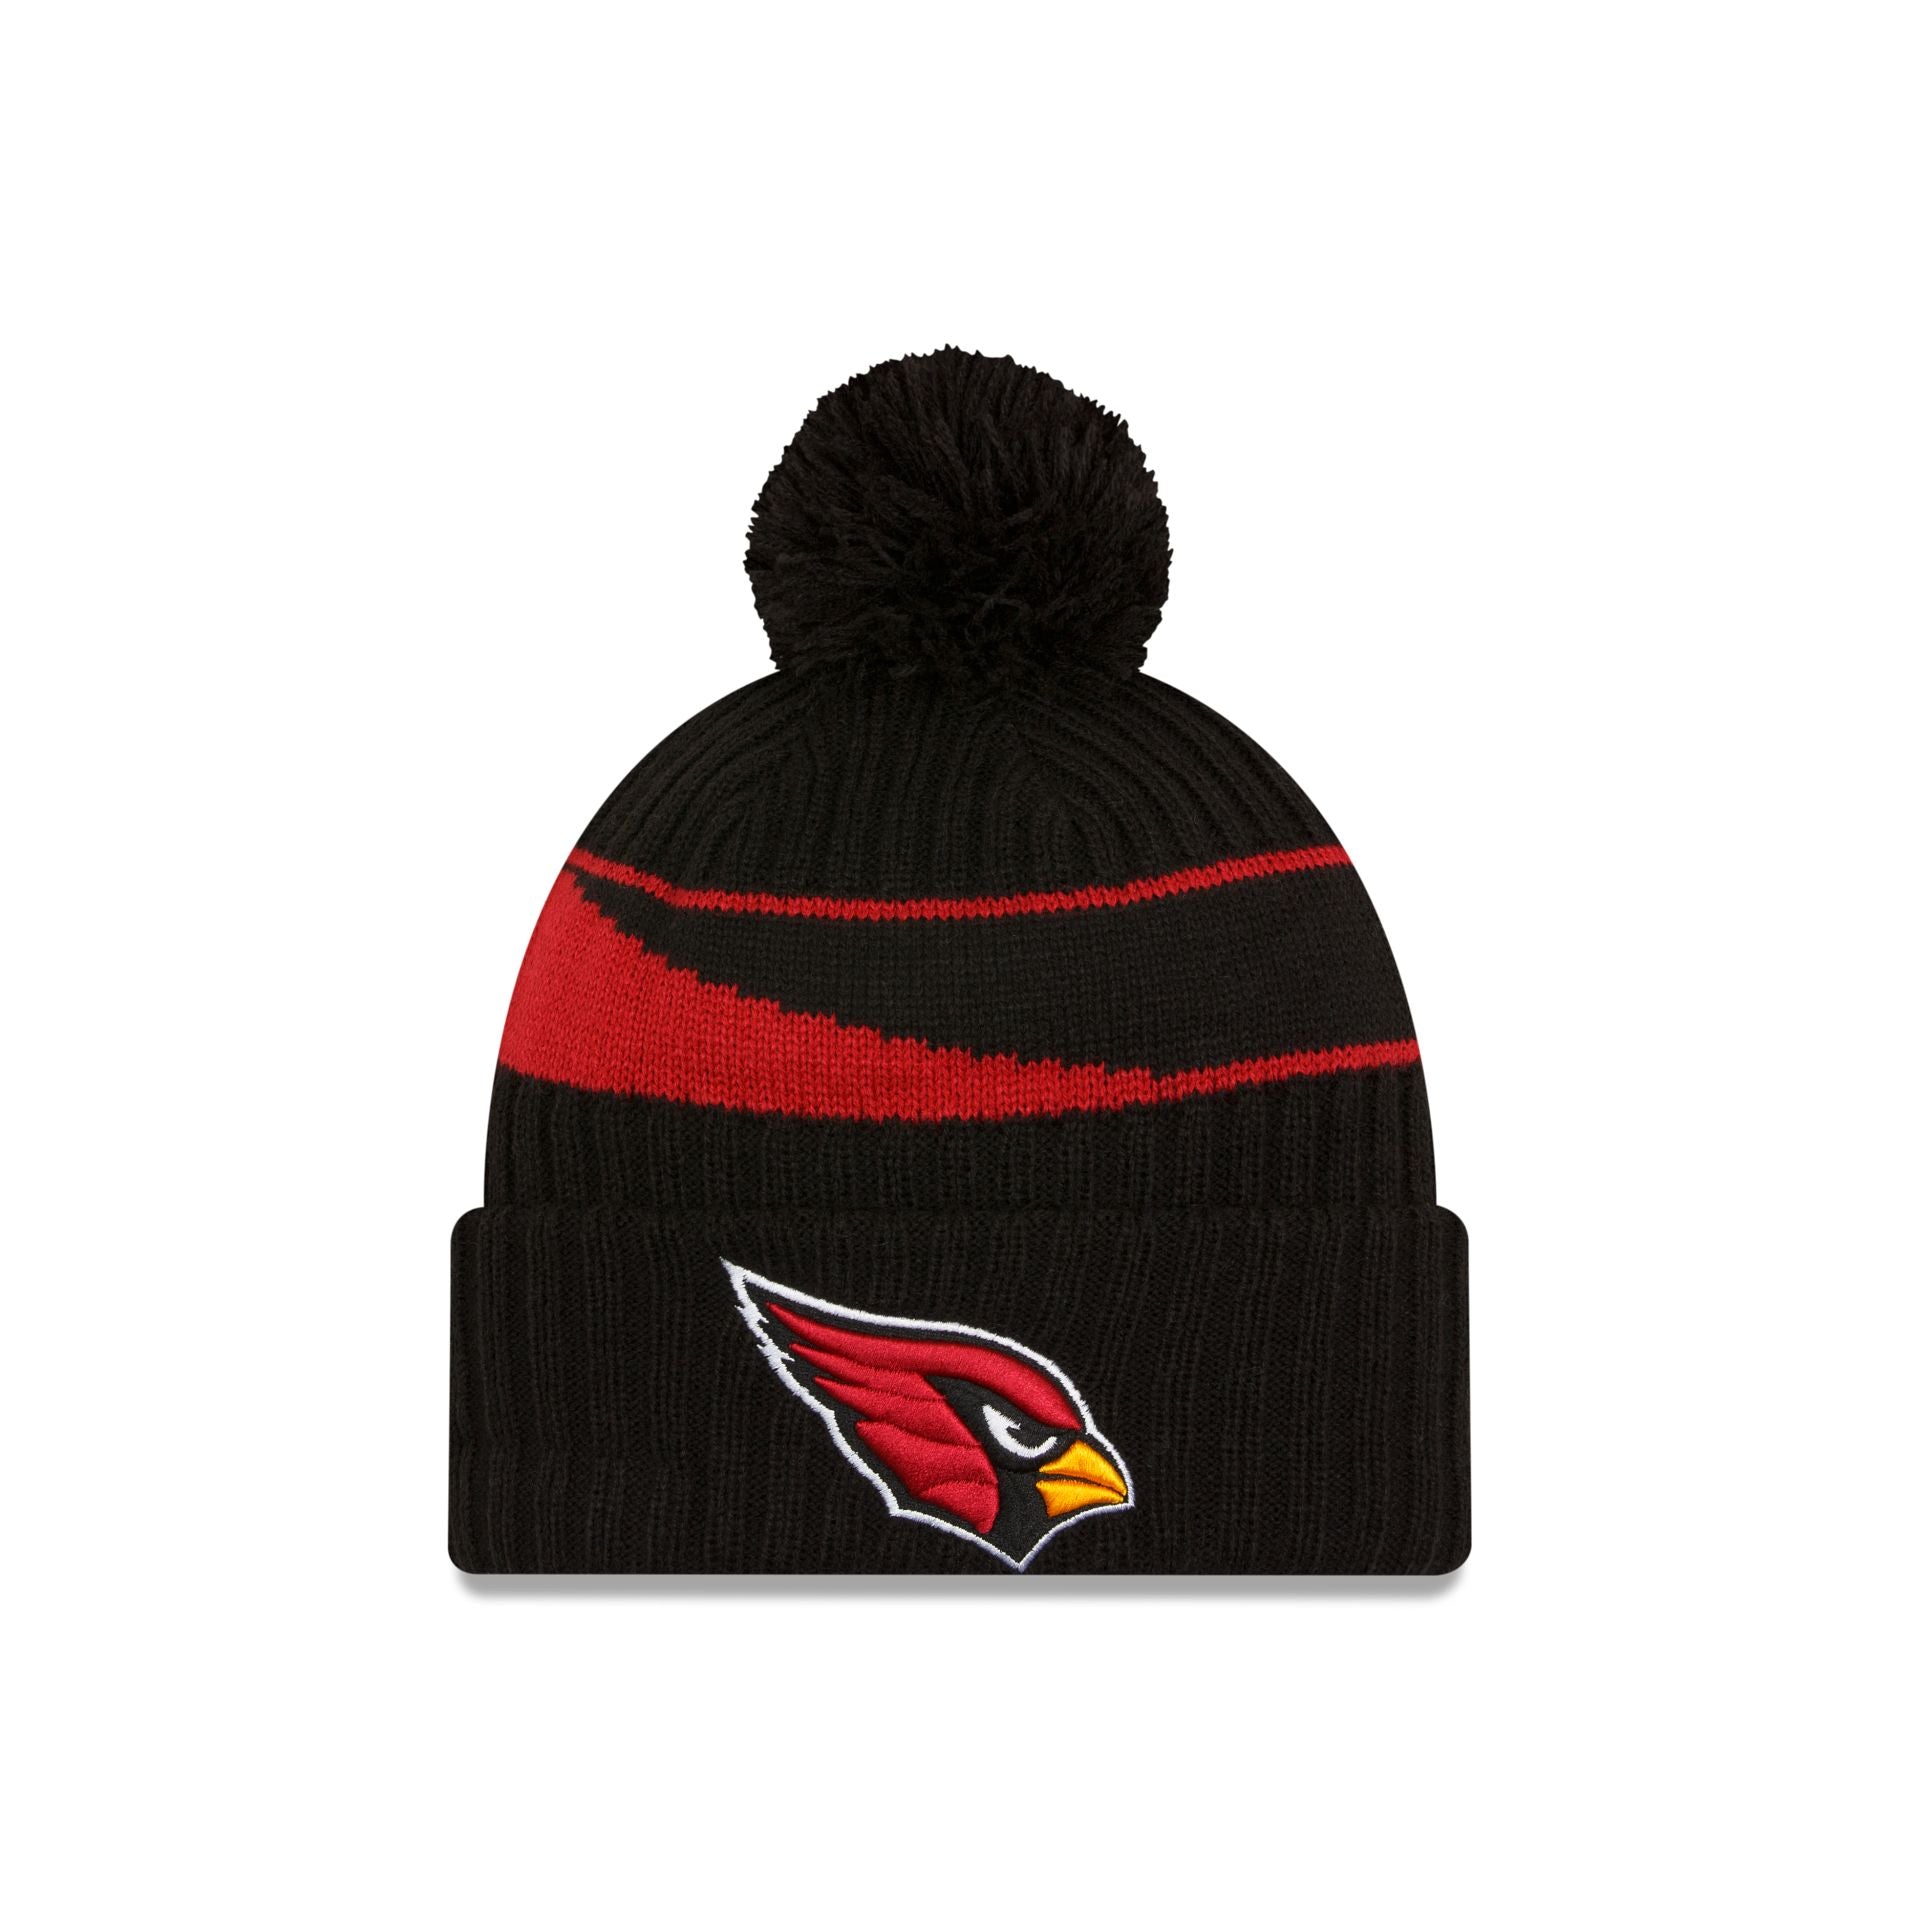 NFL Cold Weather Cap – Knits New Era